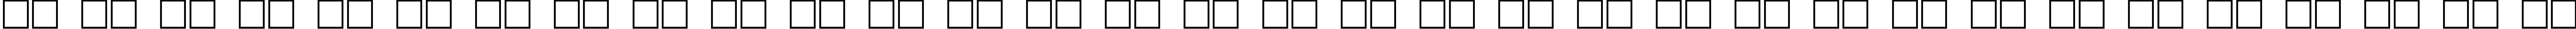 Пример написания русского алфавита шрифтом Zapf Chancery Italic:001.007